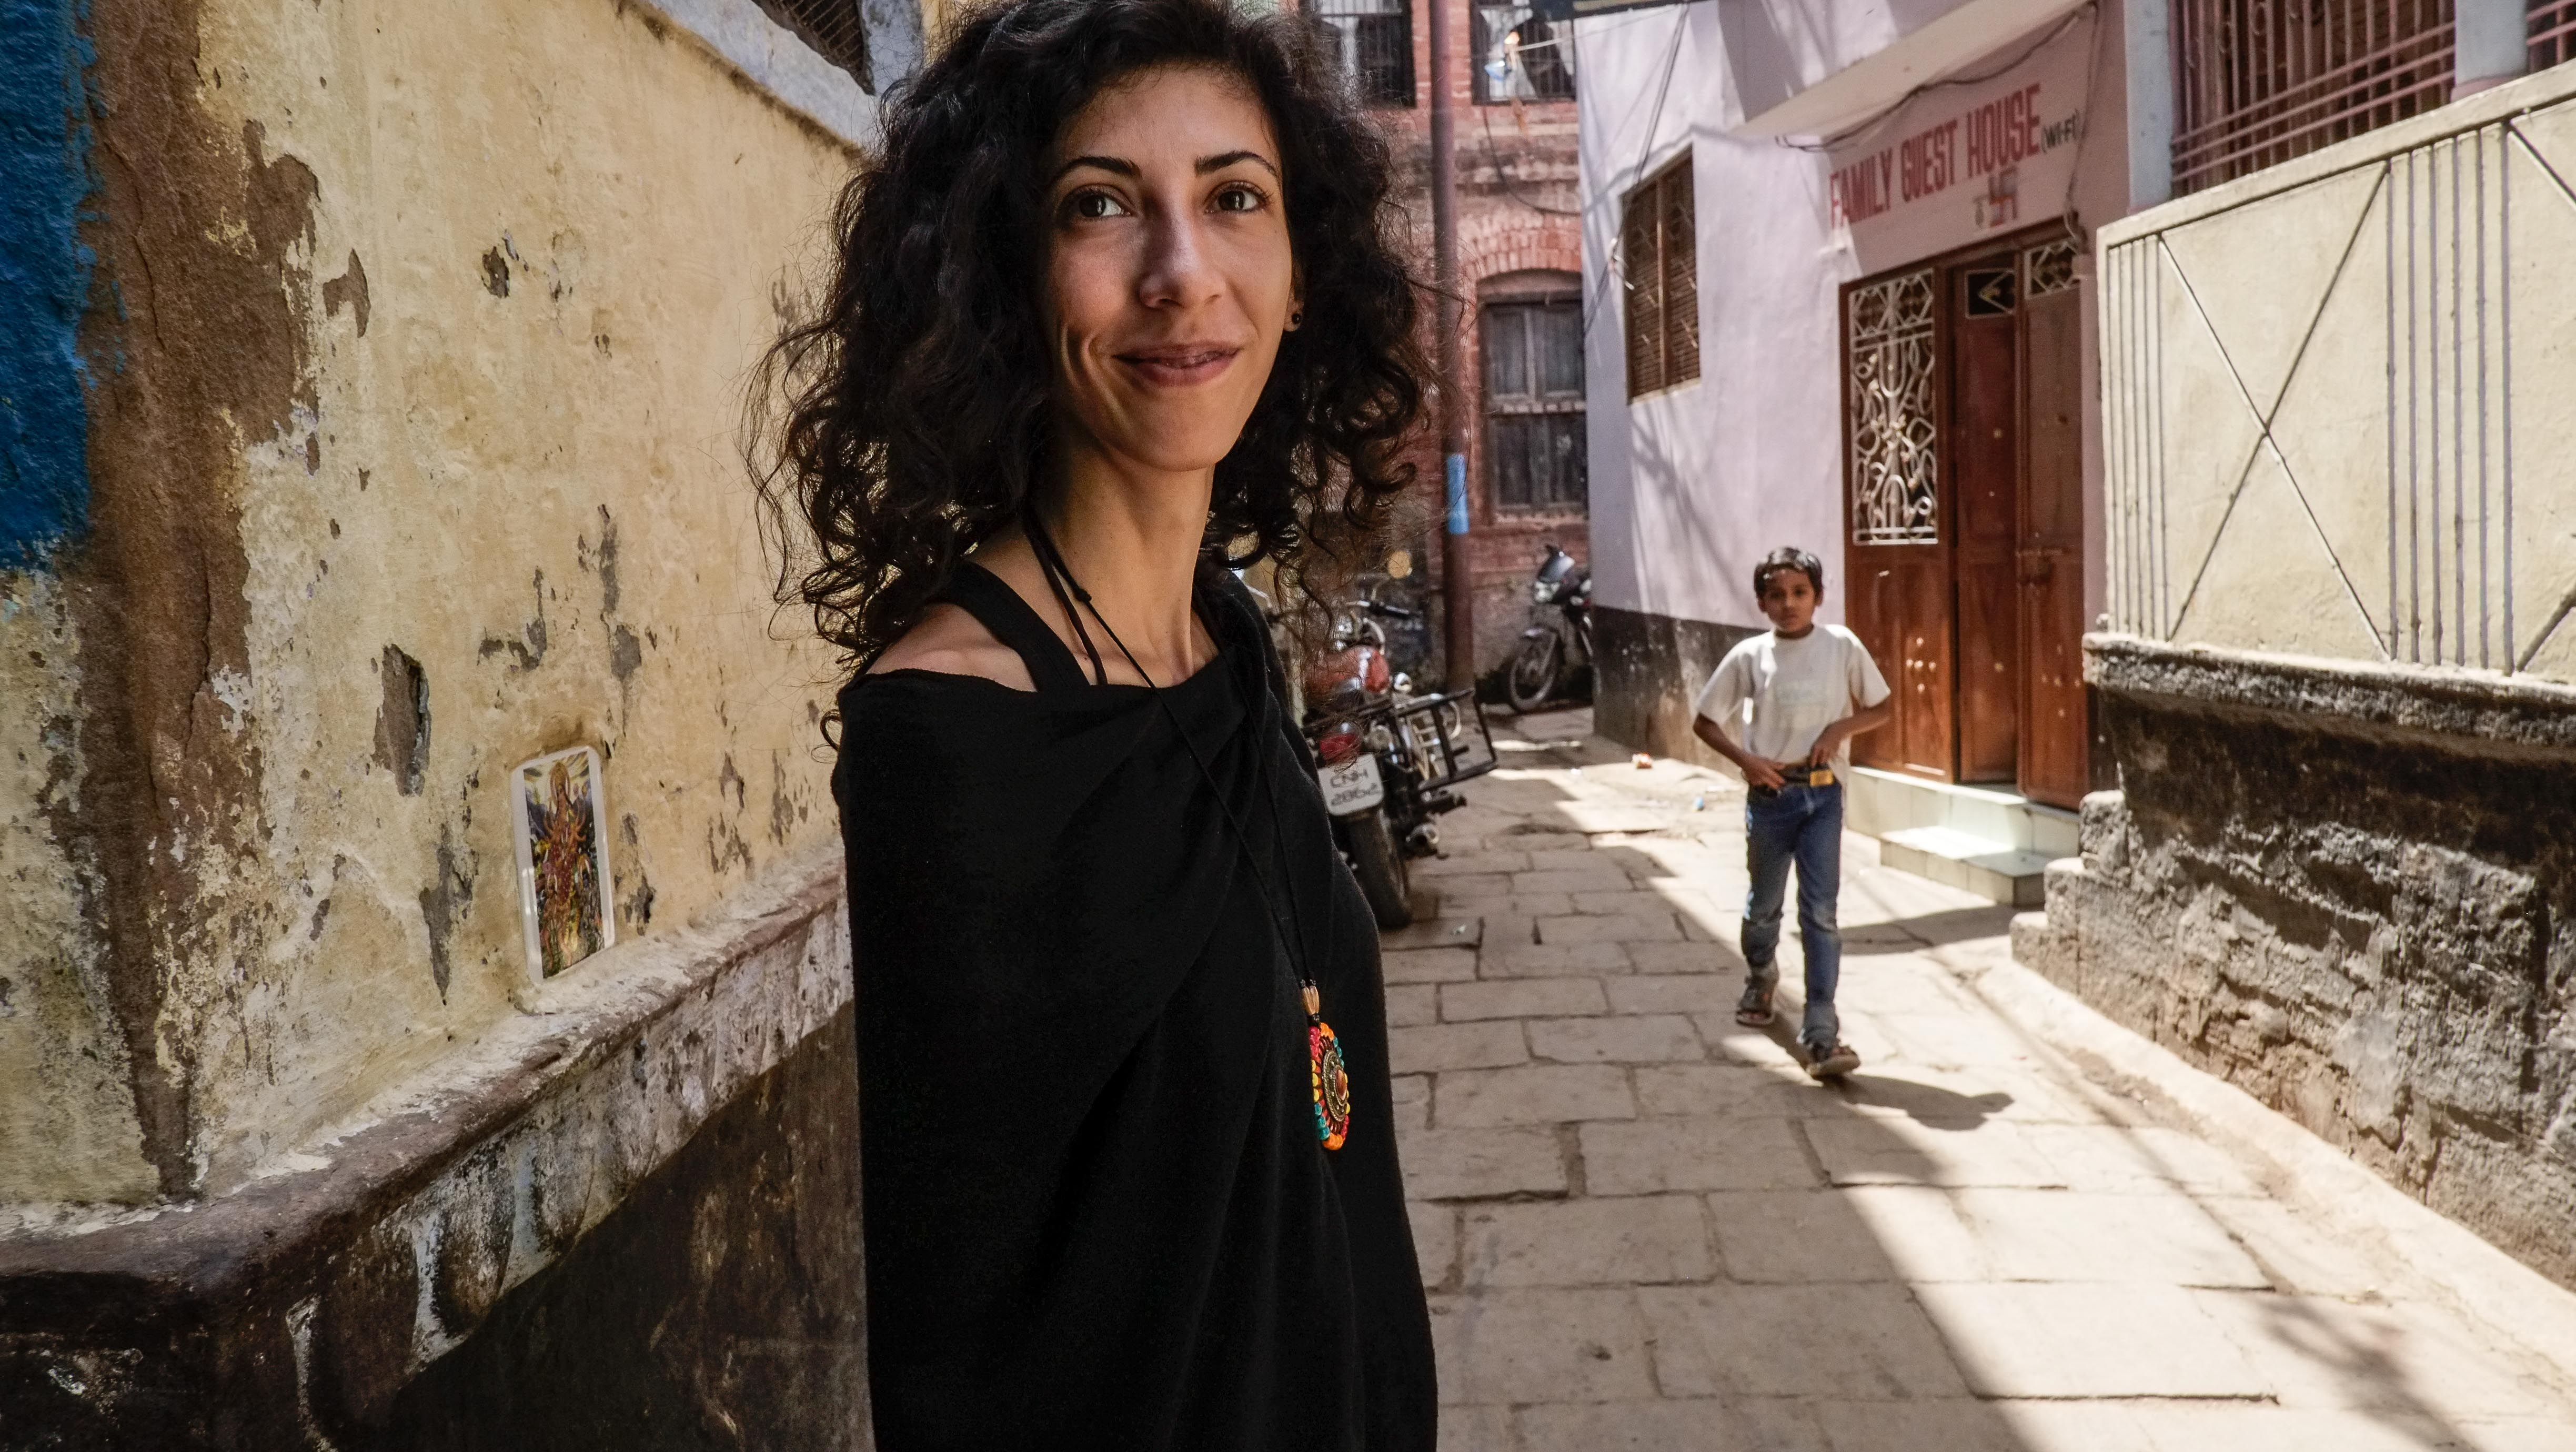 Afellow traveler in Varanasi. Her journey was similar to mine. Self reparation.